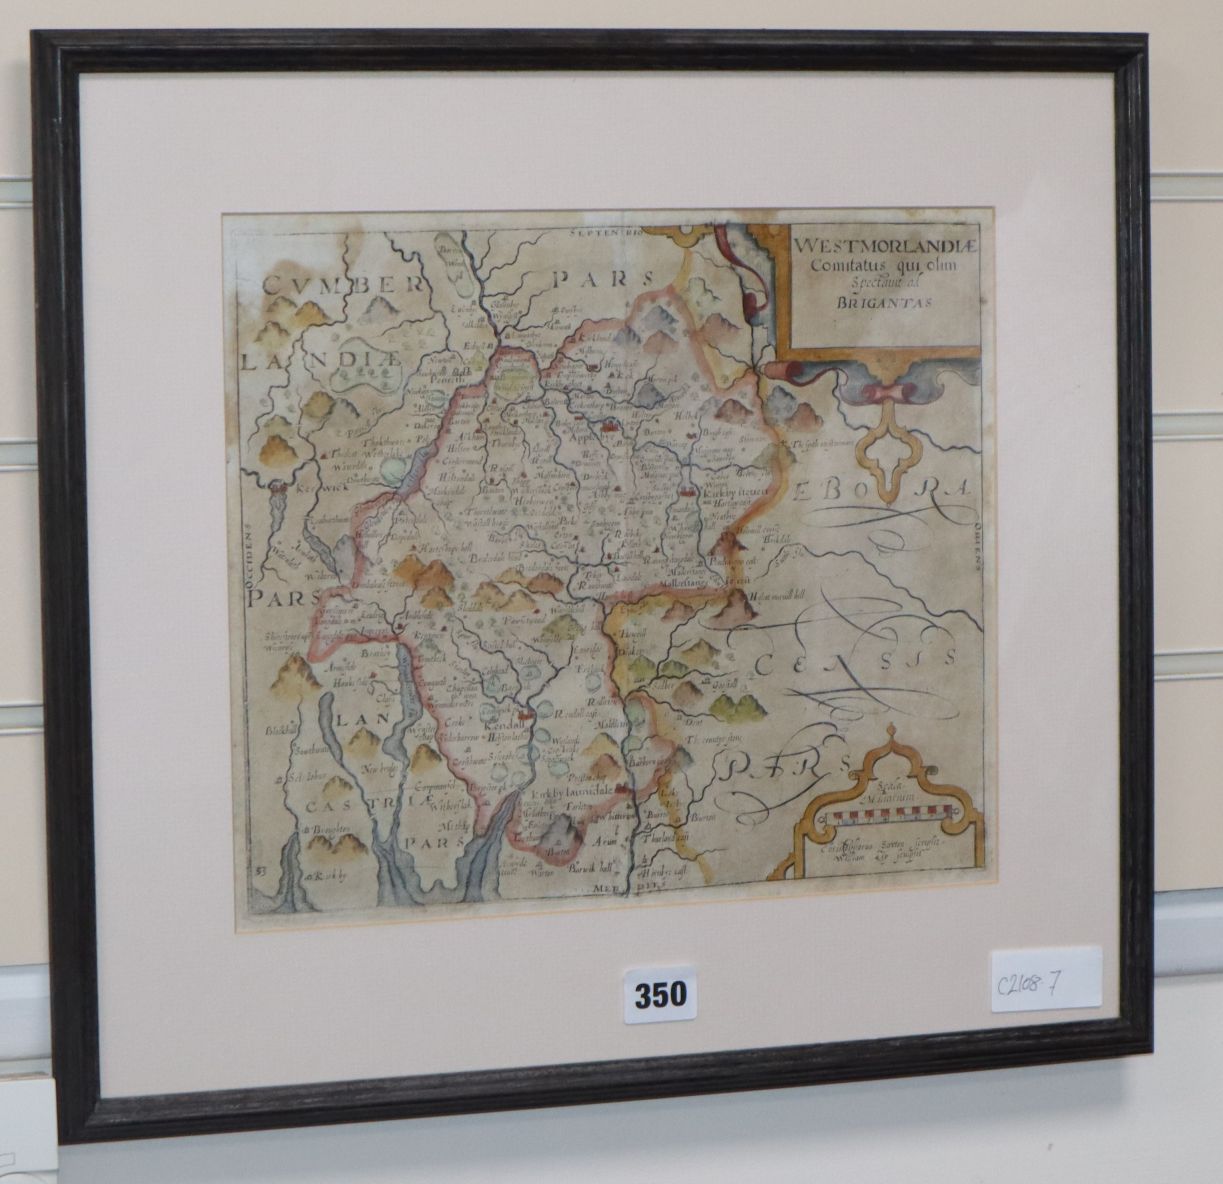 William Kip, coloured engraving, a Map of Westmorlandiae, 27 x 32cm